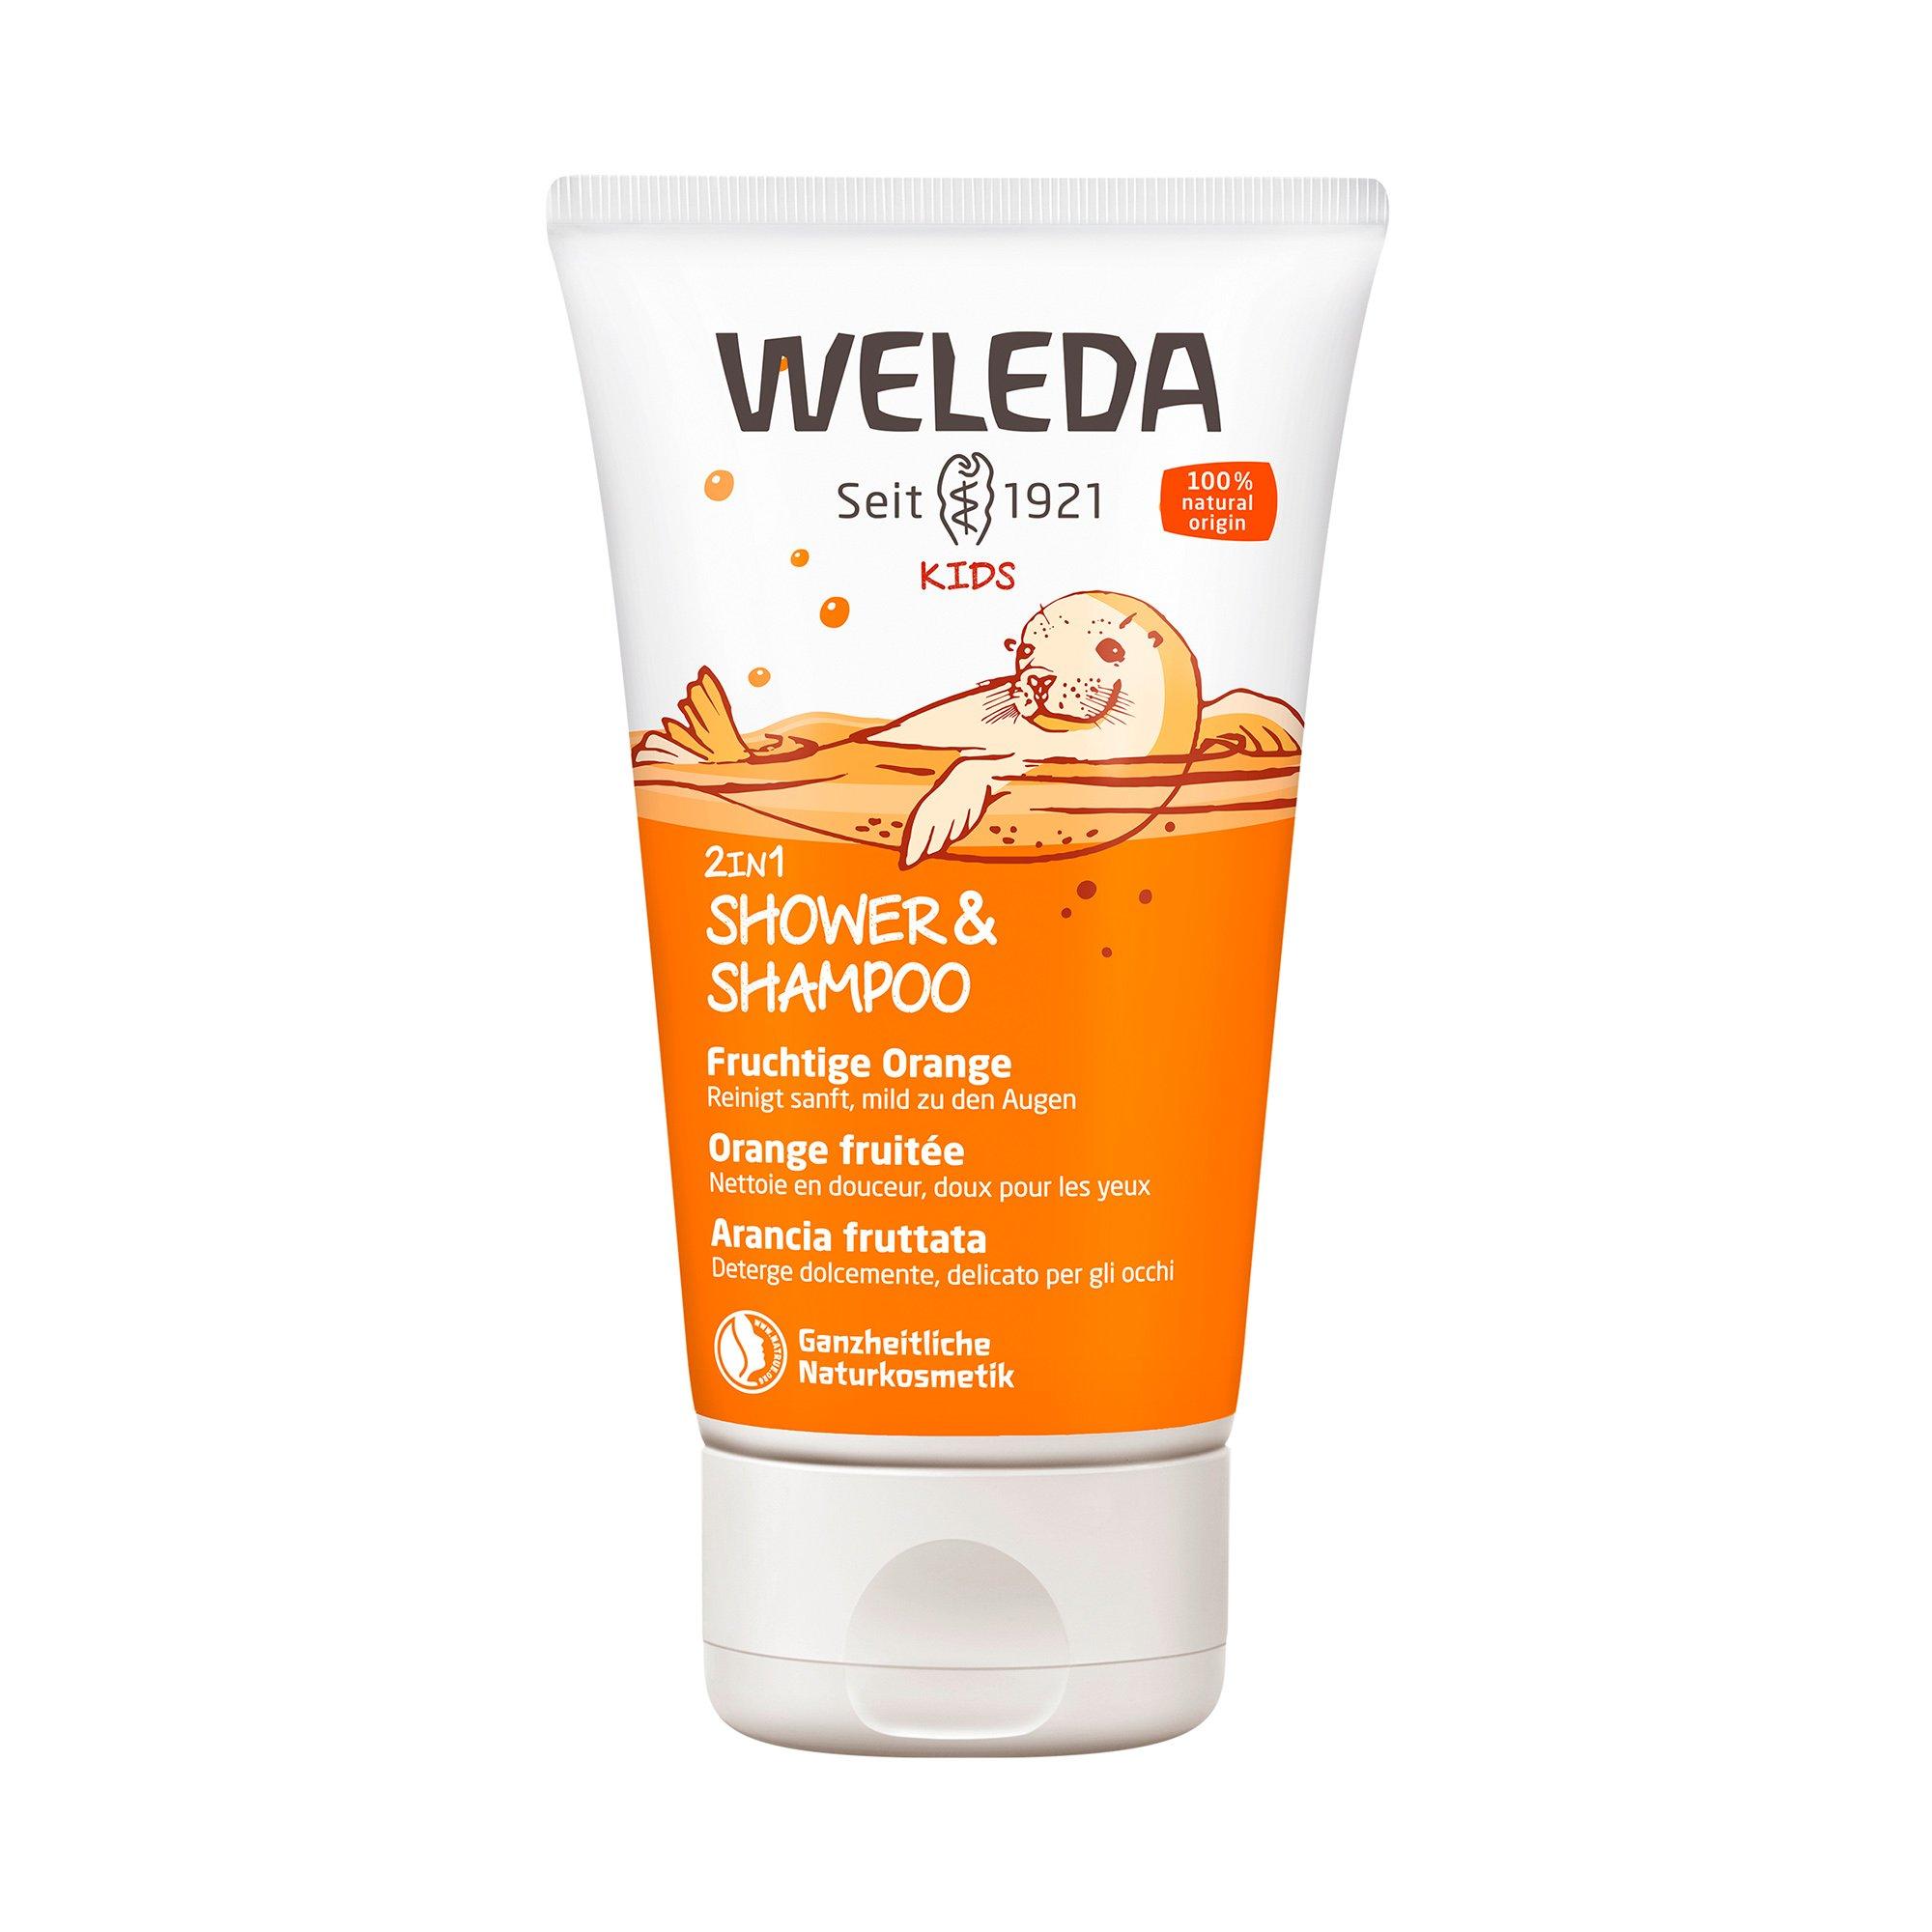 WELEDA KIDS 2in1 Shower & Shampoo Fruchtige Orange KIDS 2in1 Shower & Shampoo Fruchtige Orange 